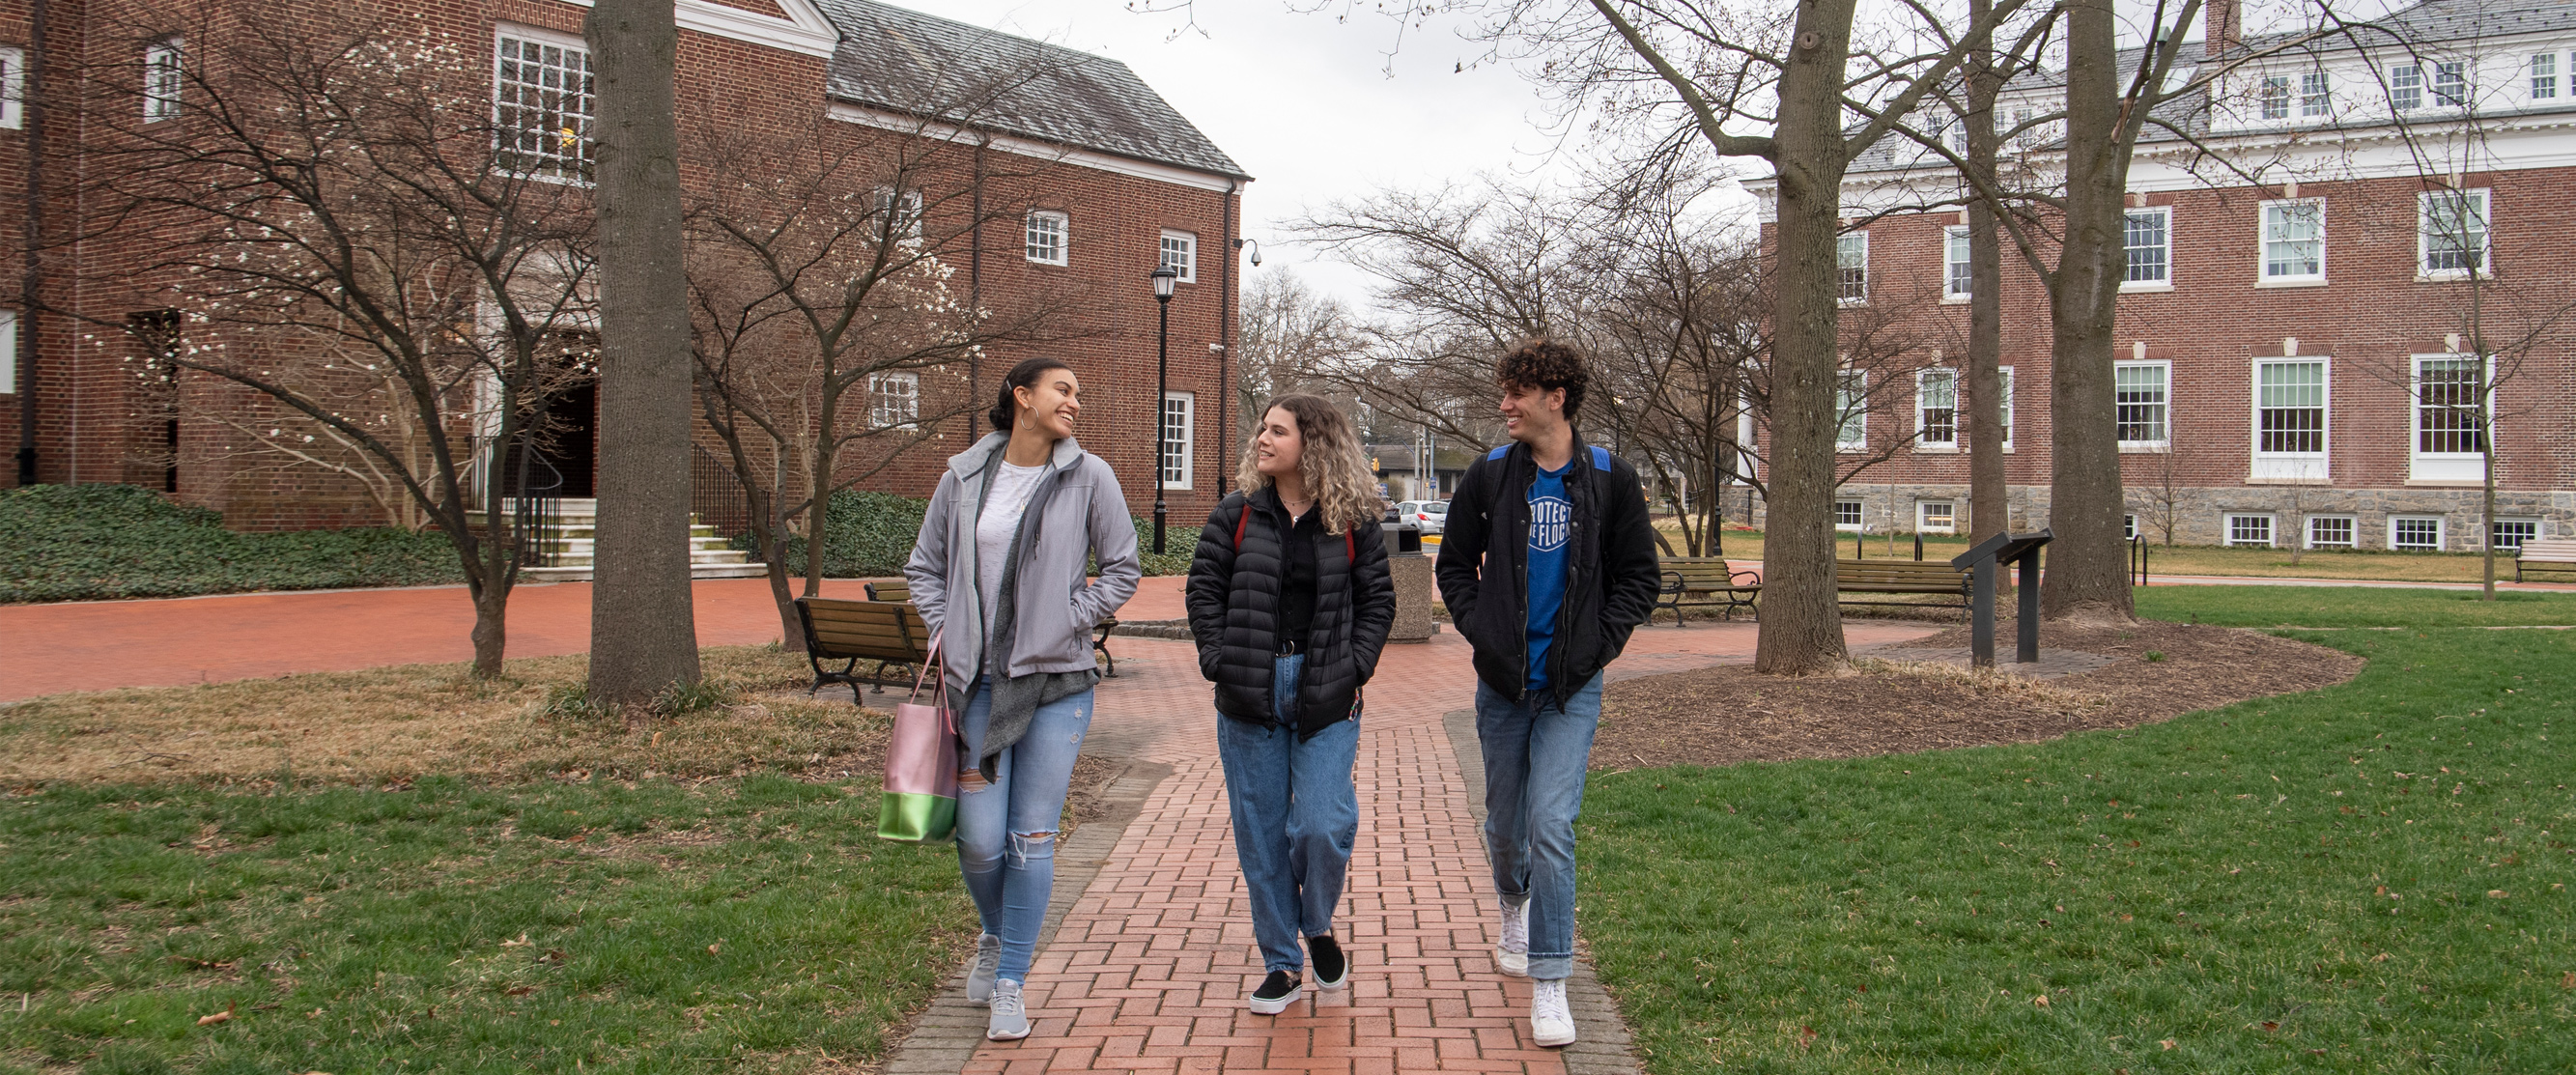 three students walking across the green